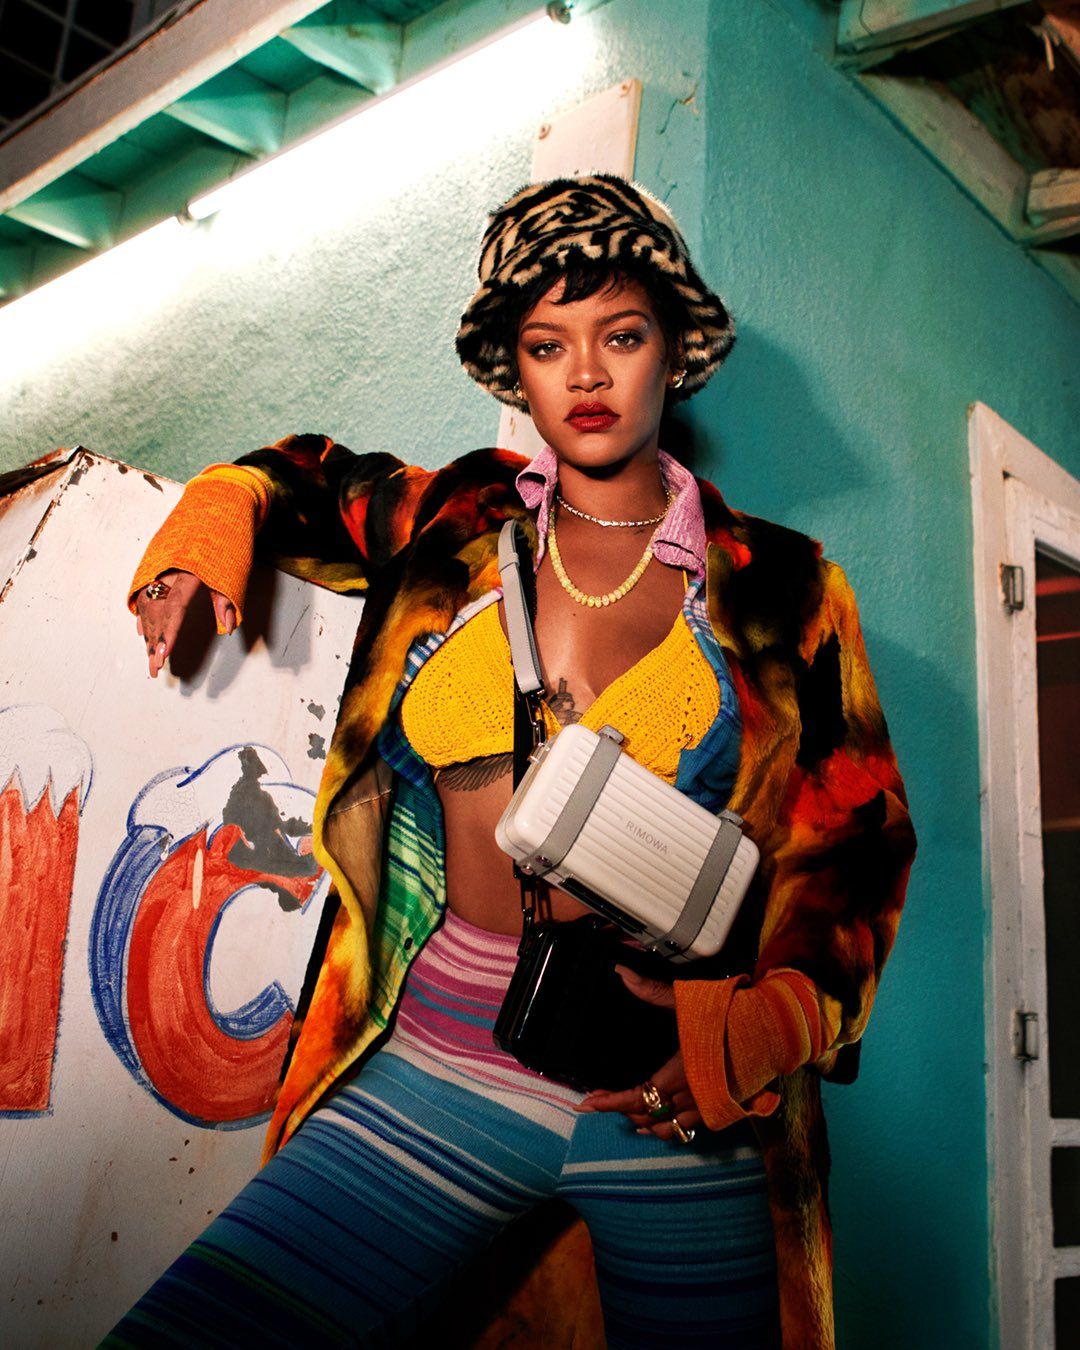 Rihanna's many fashion collaborations and campaigns